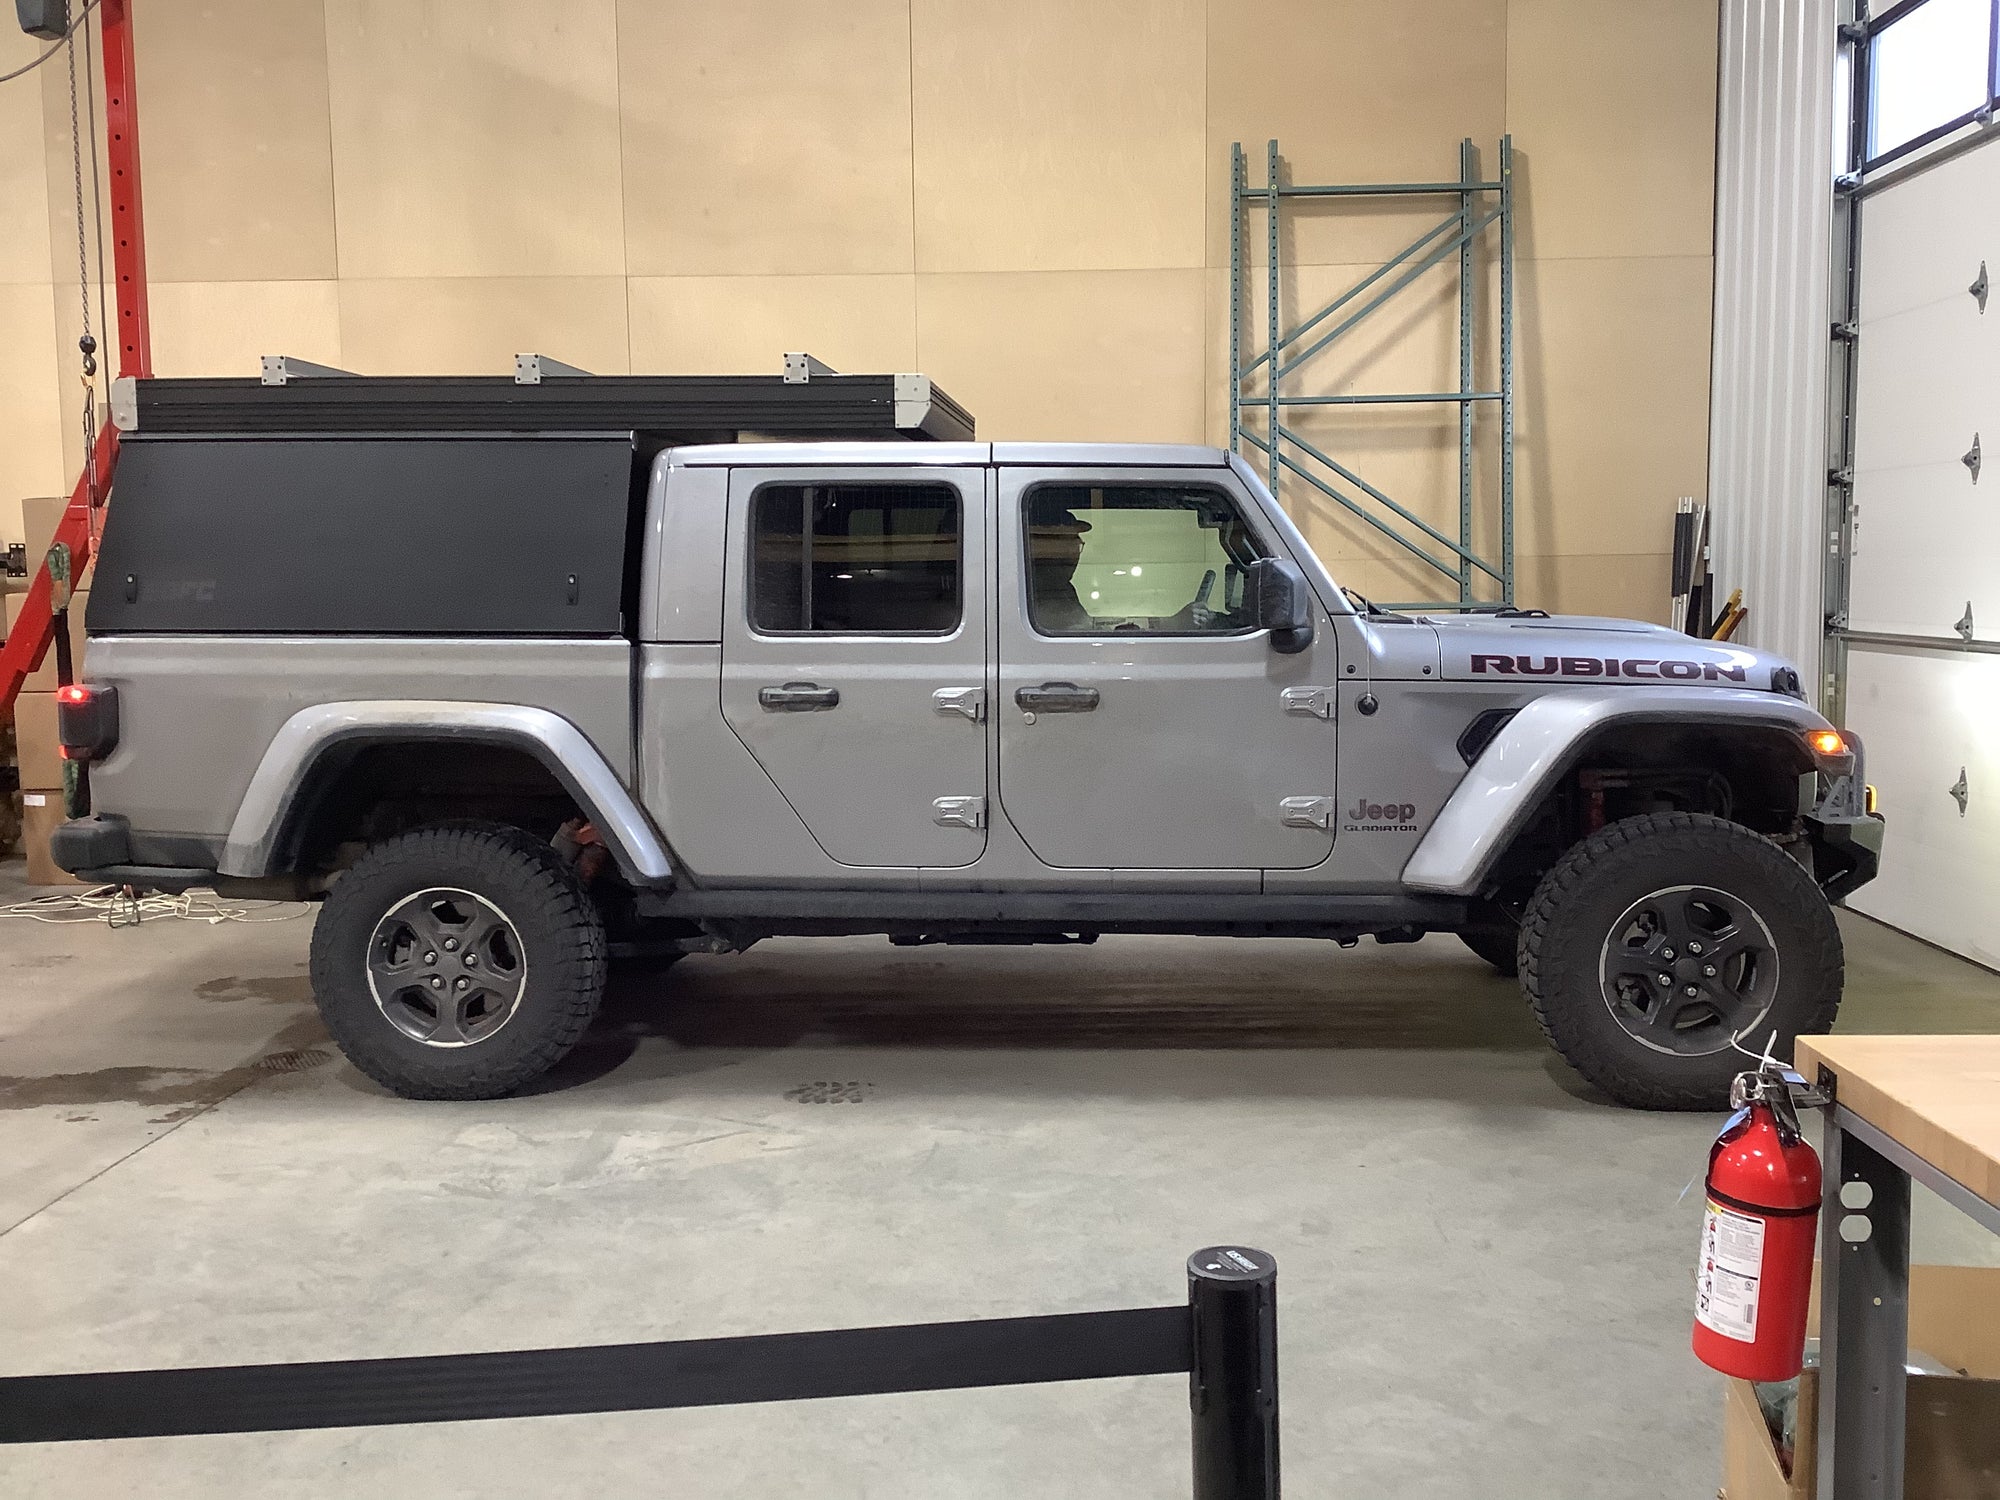 2021 Jeep Gladiator Camper - Build #3019